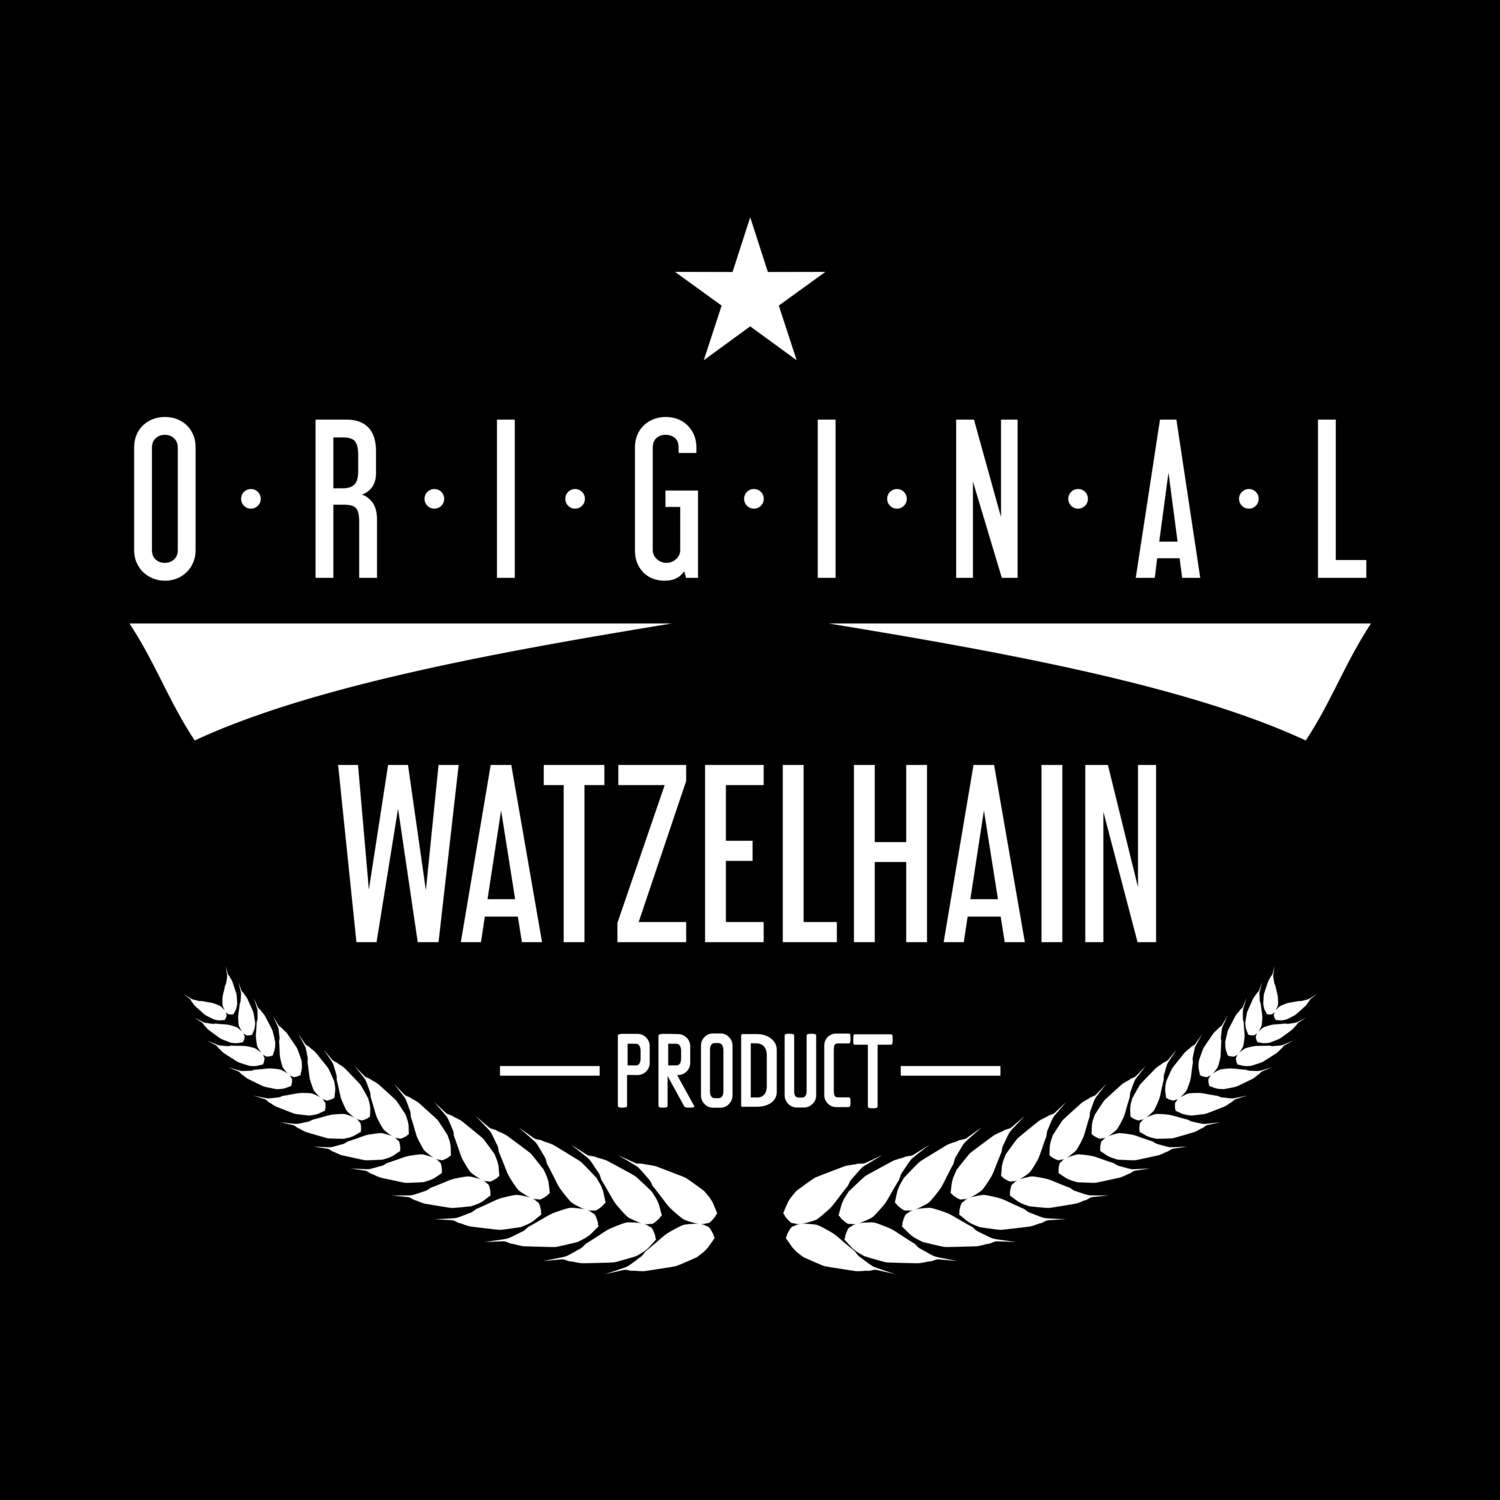 Watzelhain T-Shirt »Original Product«